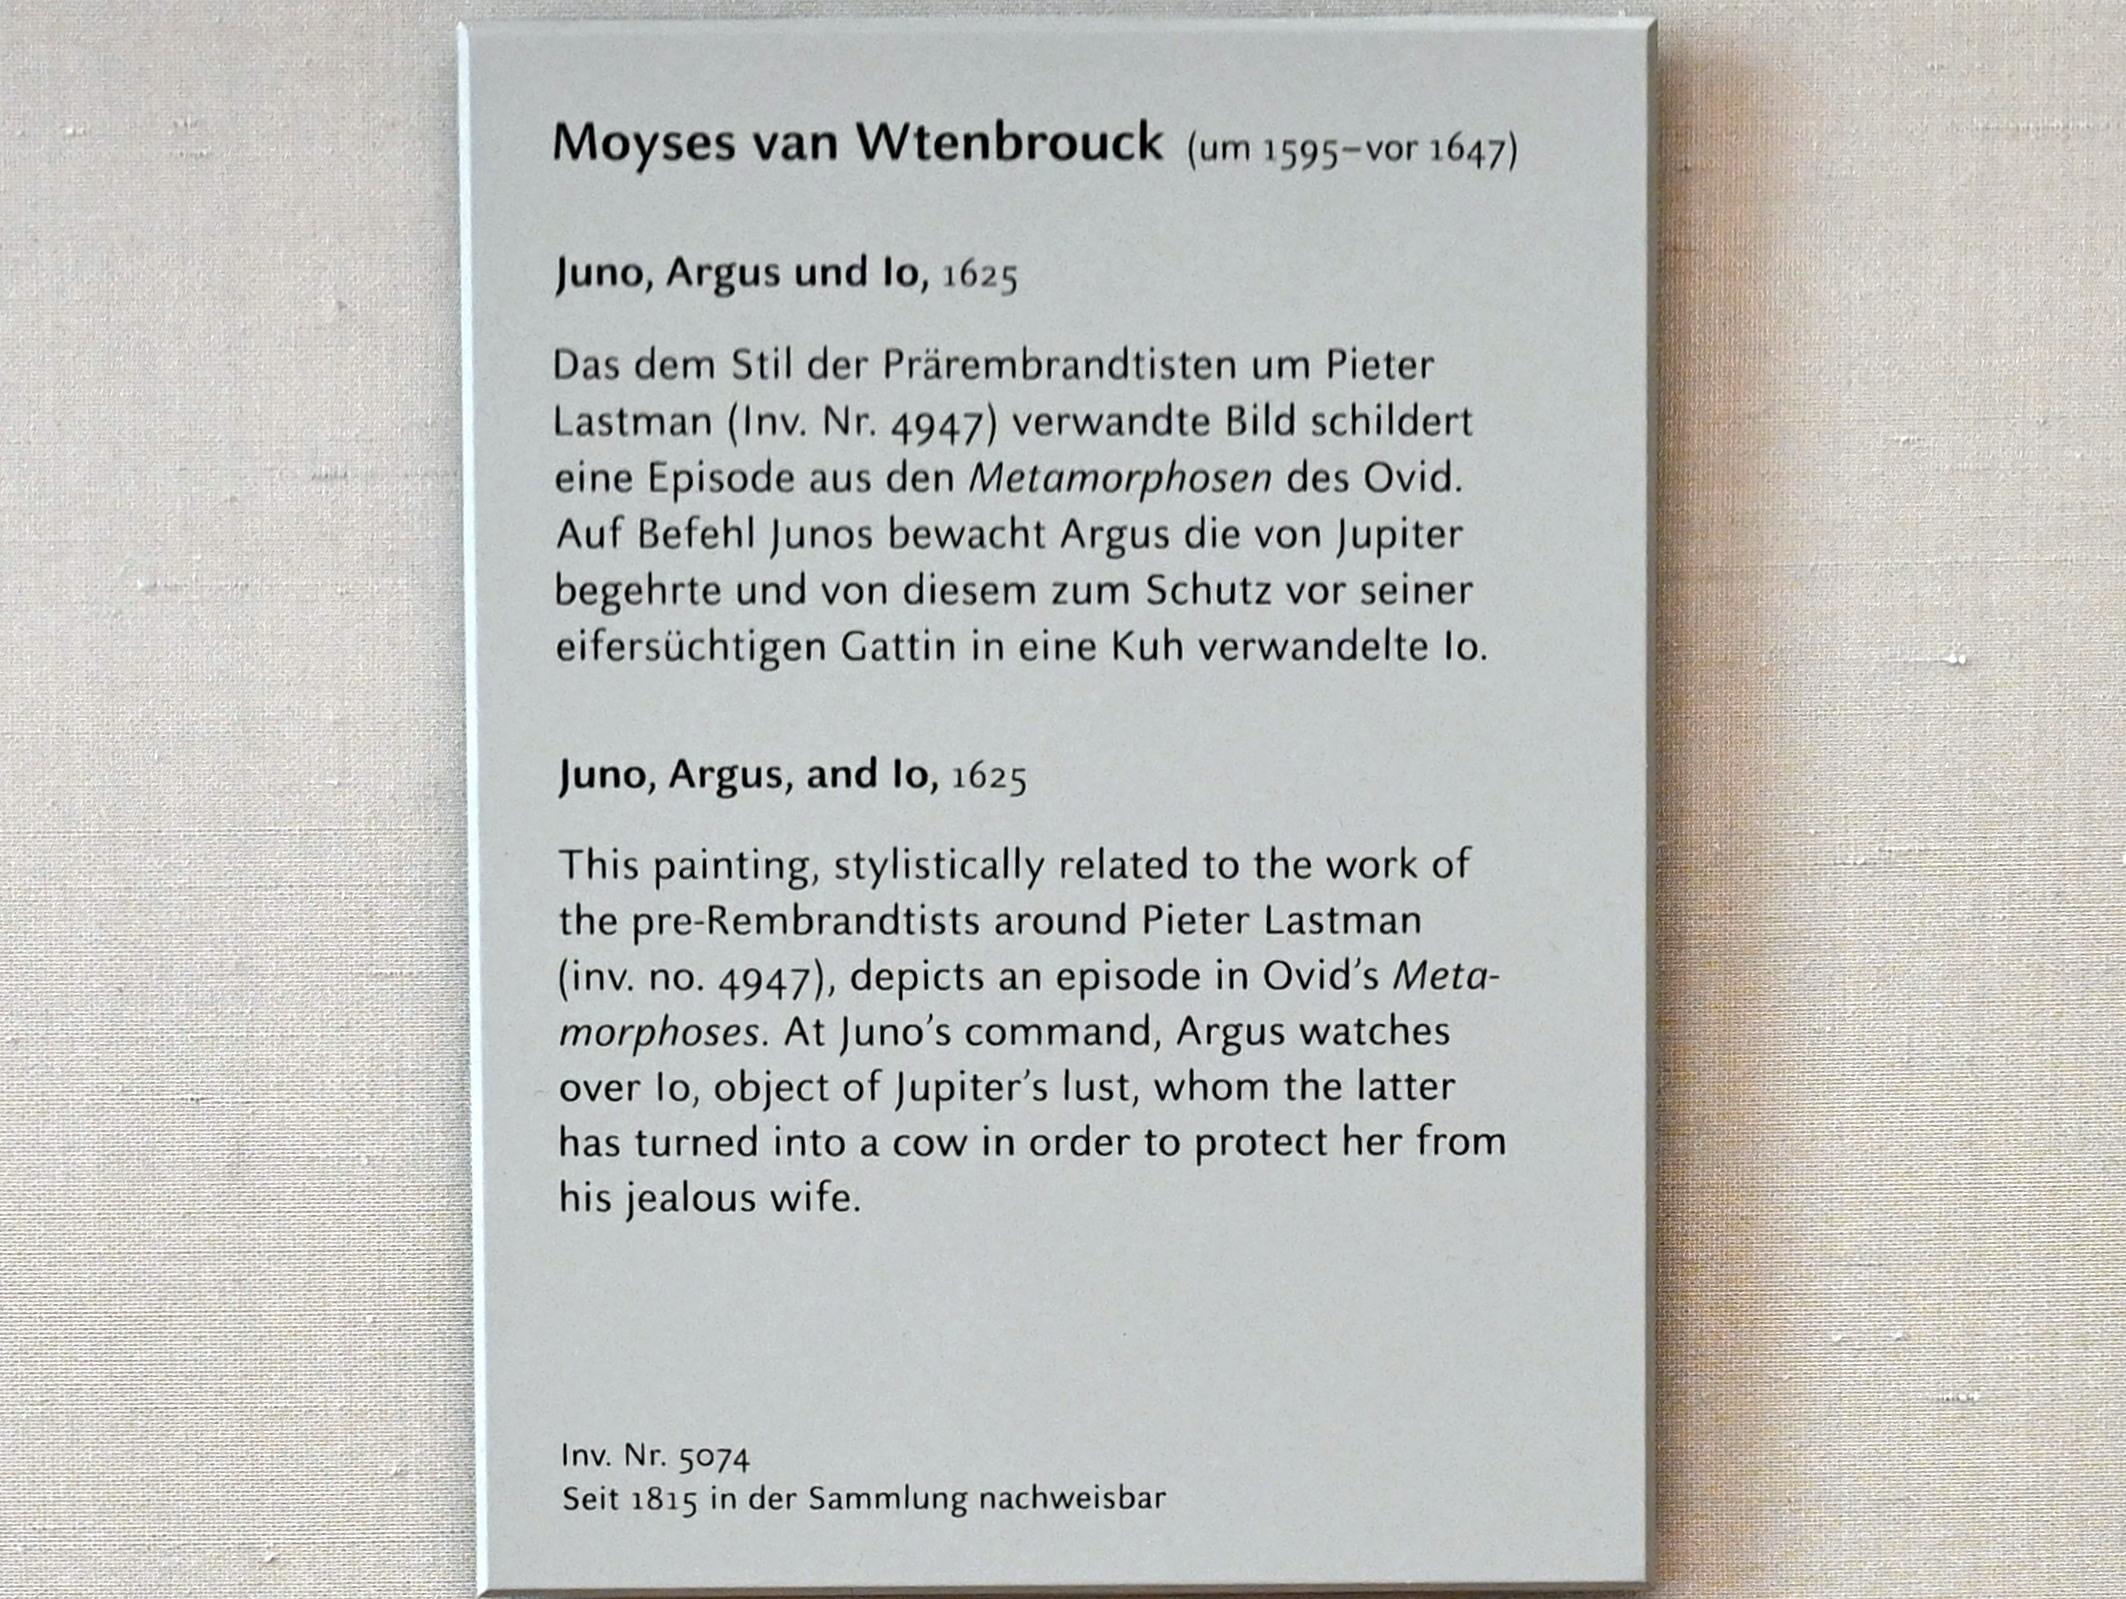 Moyses van Wtenbrouck (1625), Juno, Argus und Io, München, Alte Pinakothek, Obergeschoss Kabinett 15, 1625, Bild 2/2